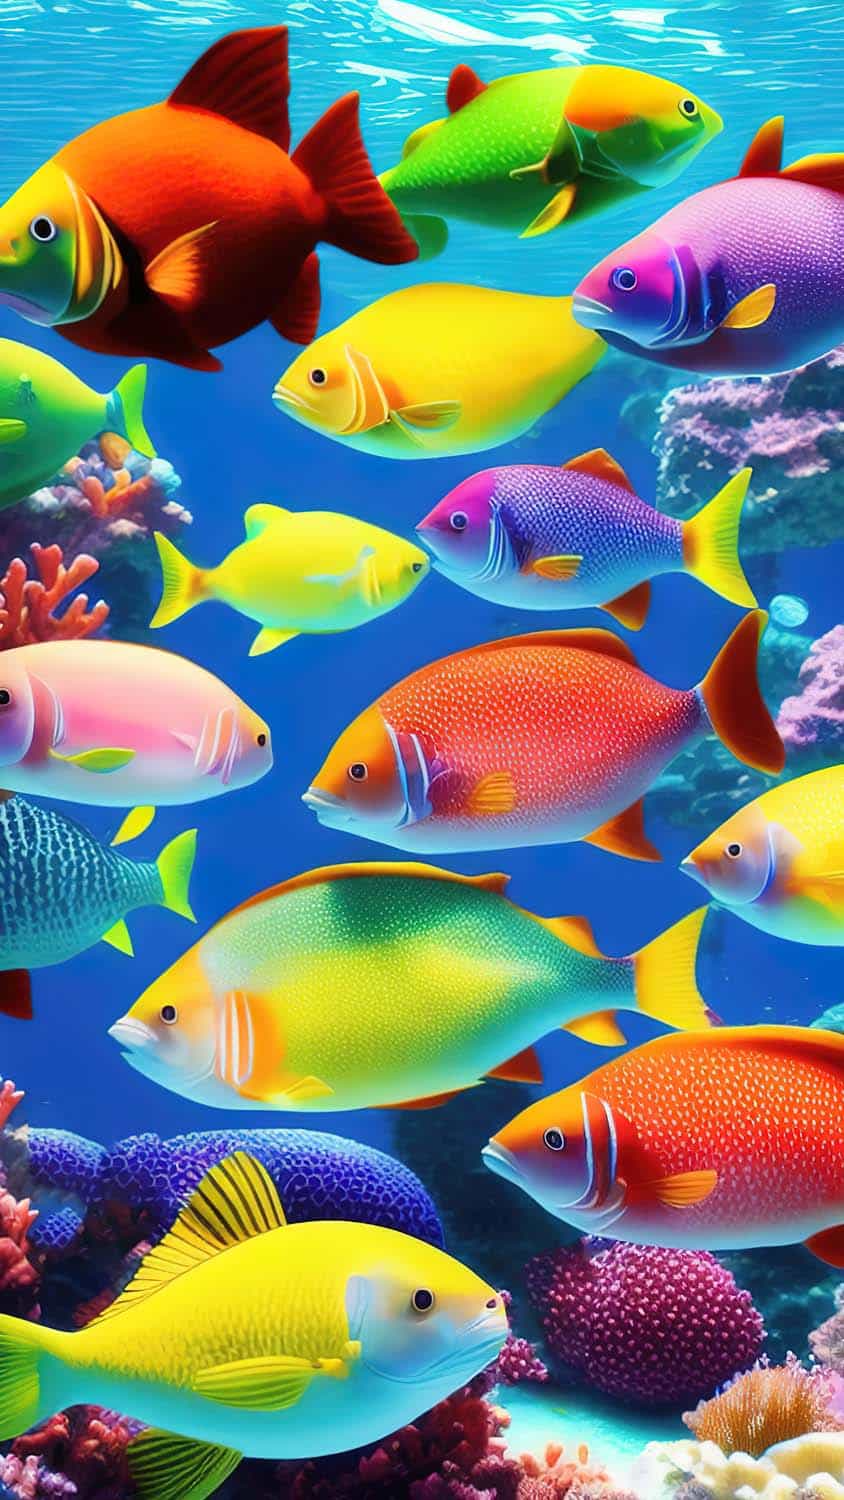 750 Aquarium Pictures HD  Download Free Images on Unsplash